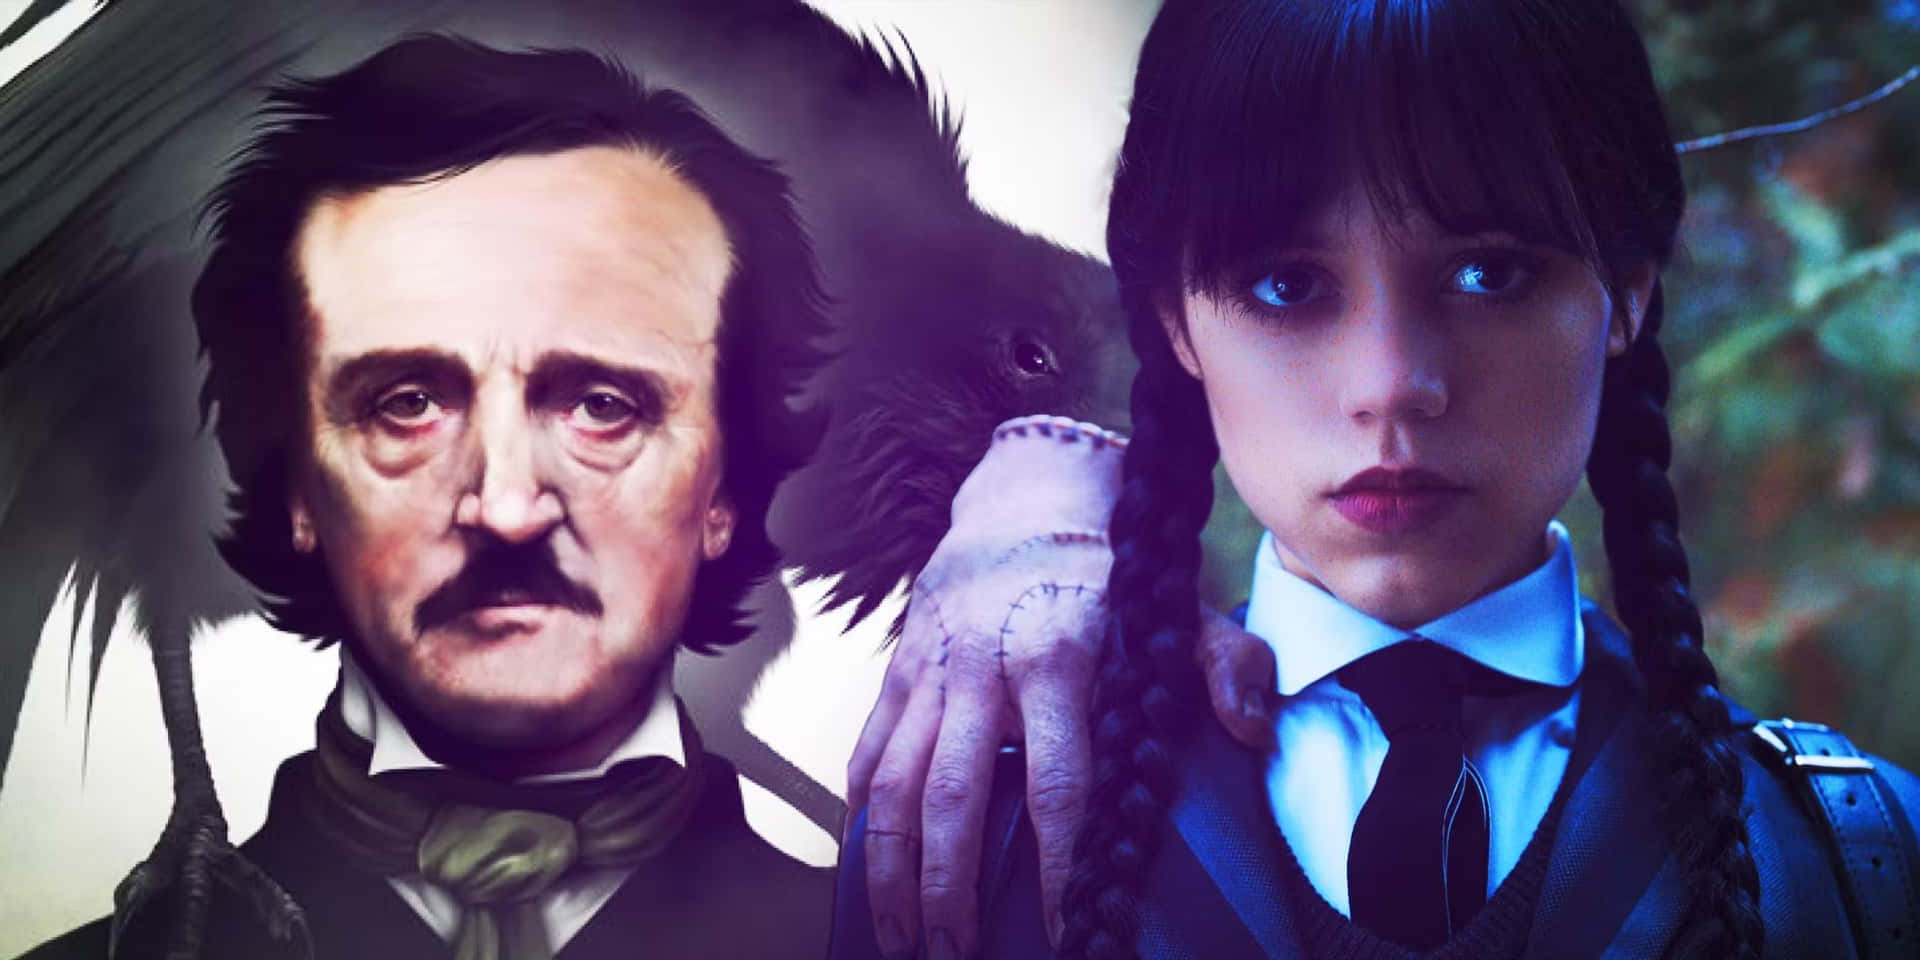 Edgar Allan Poeand Mysterious Girlwith Raven Background